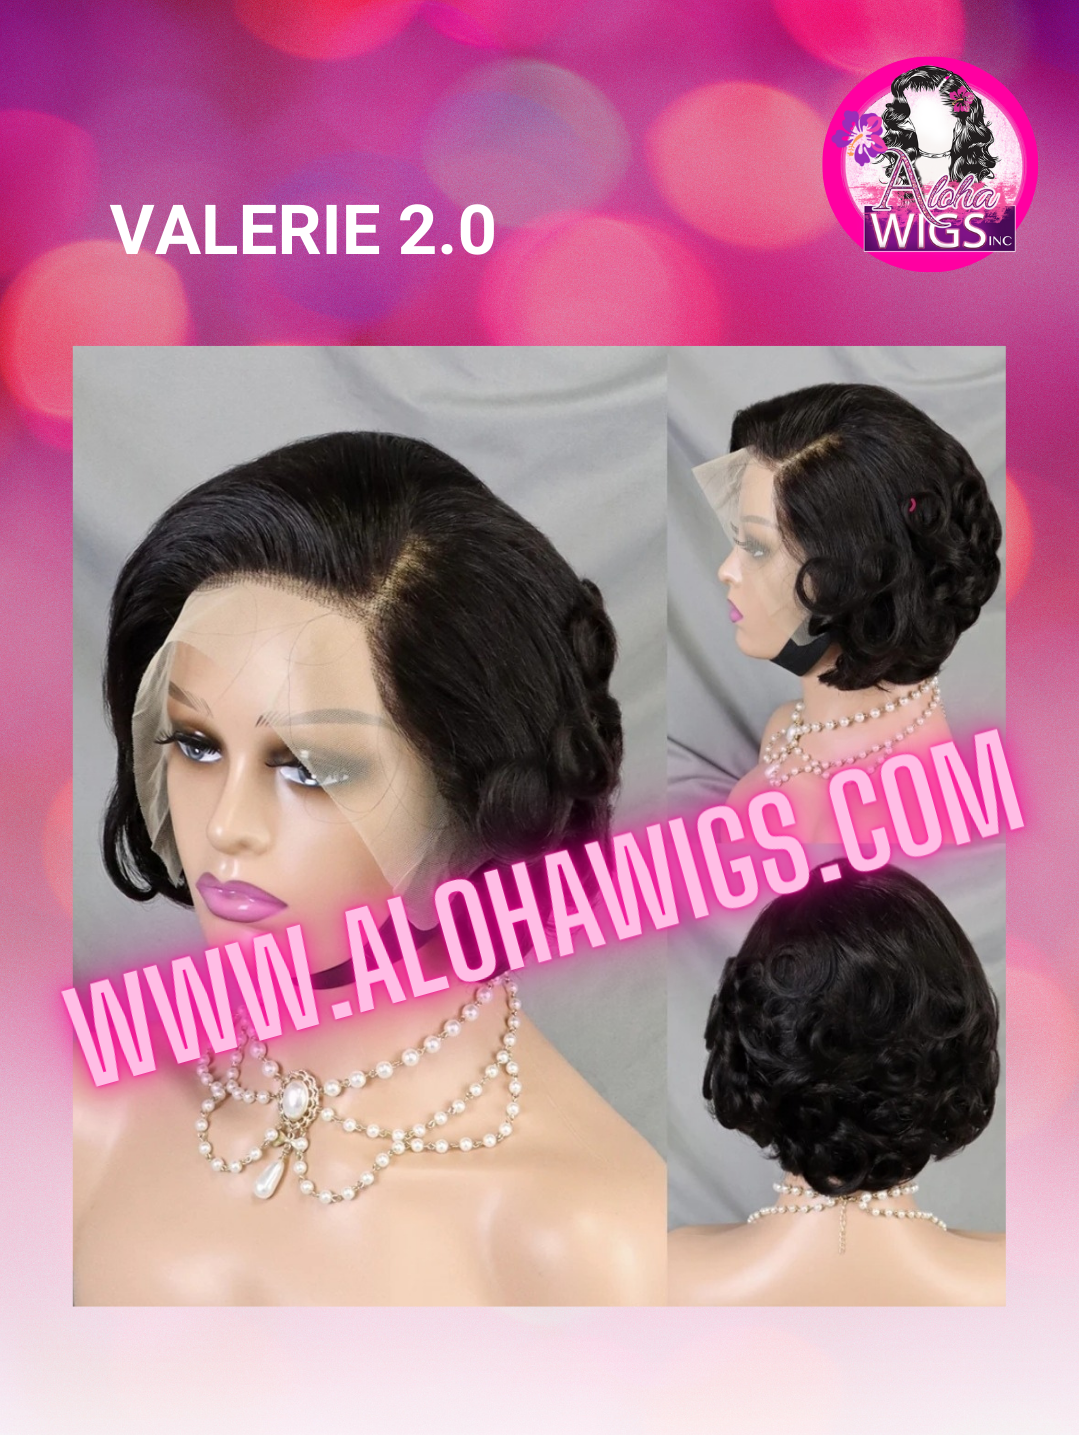 Valerie 2.0